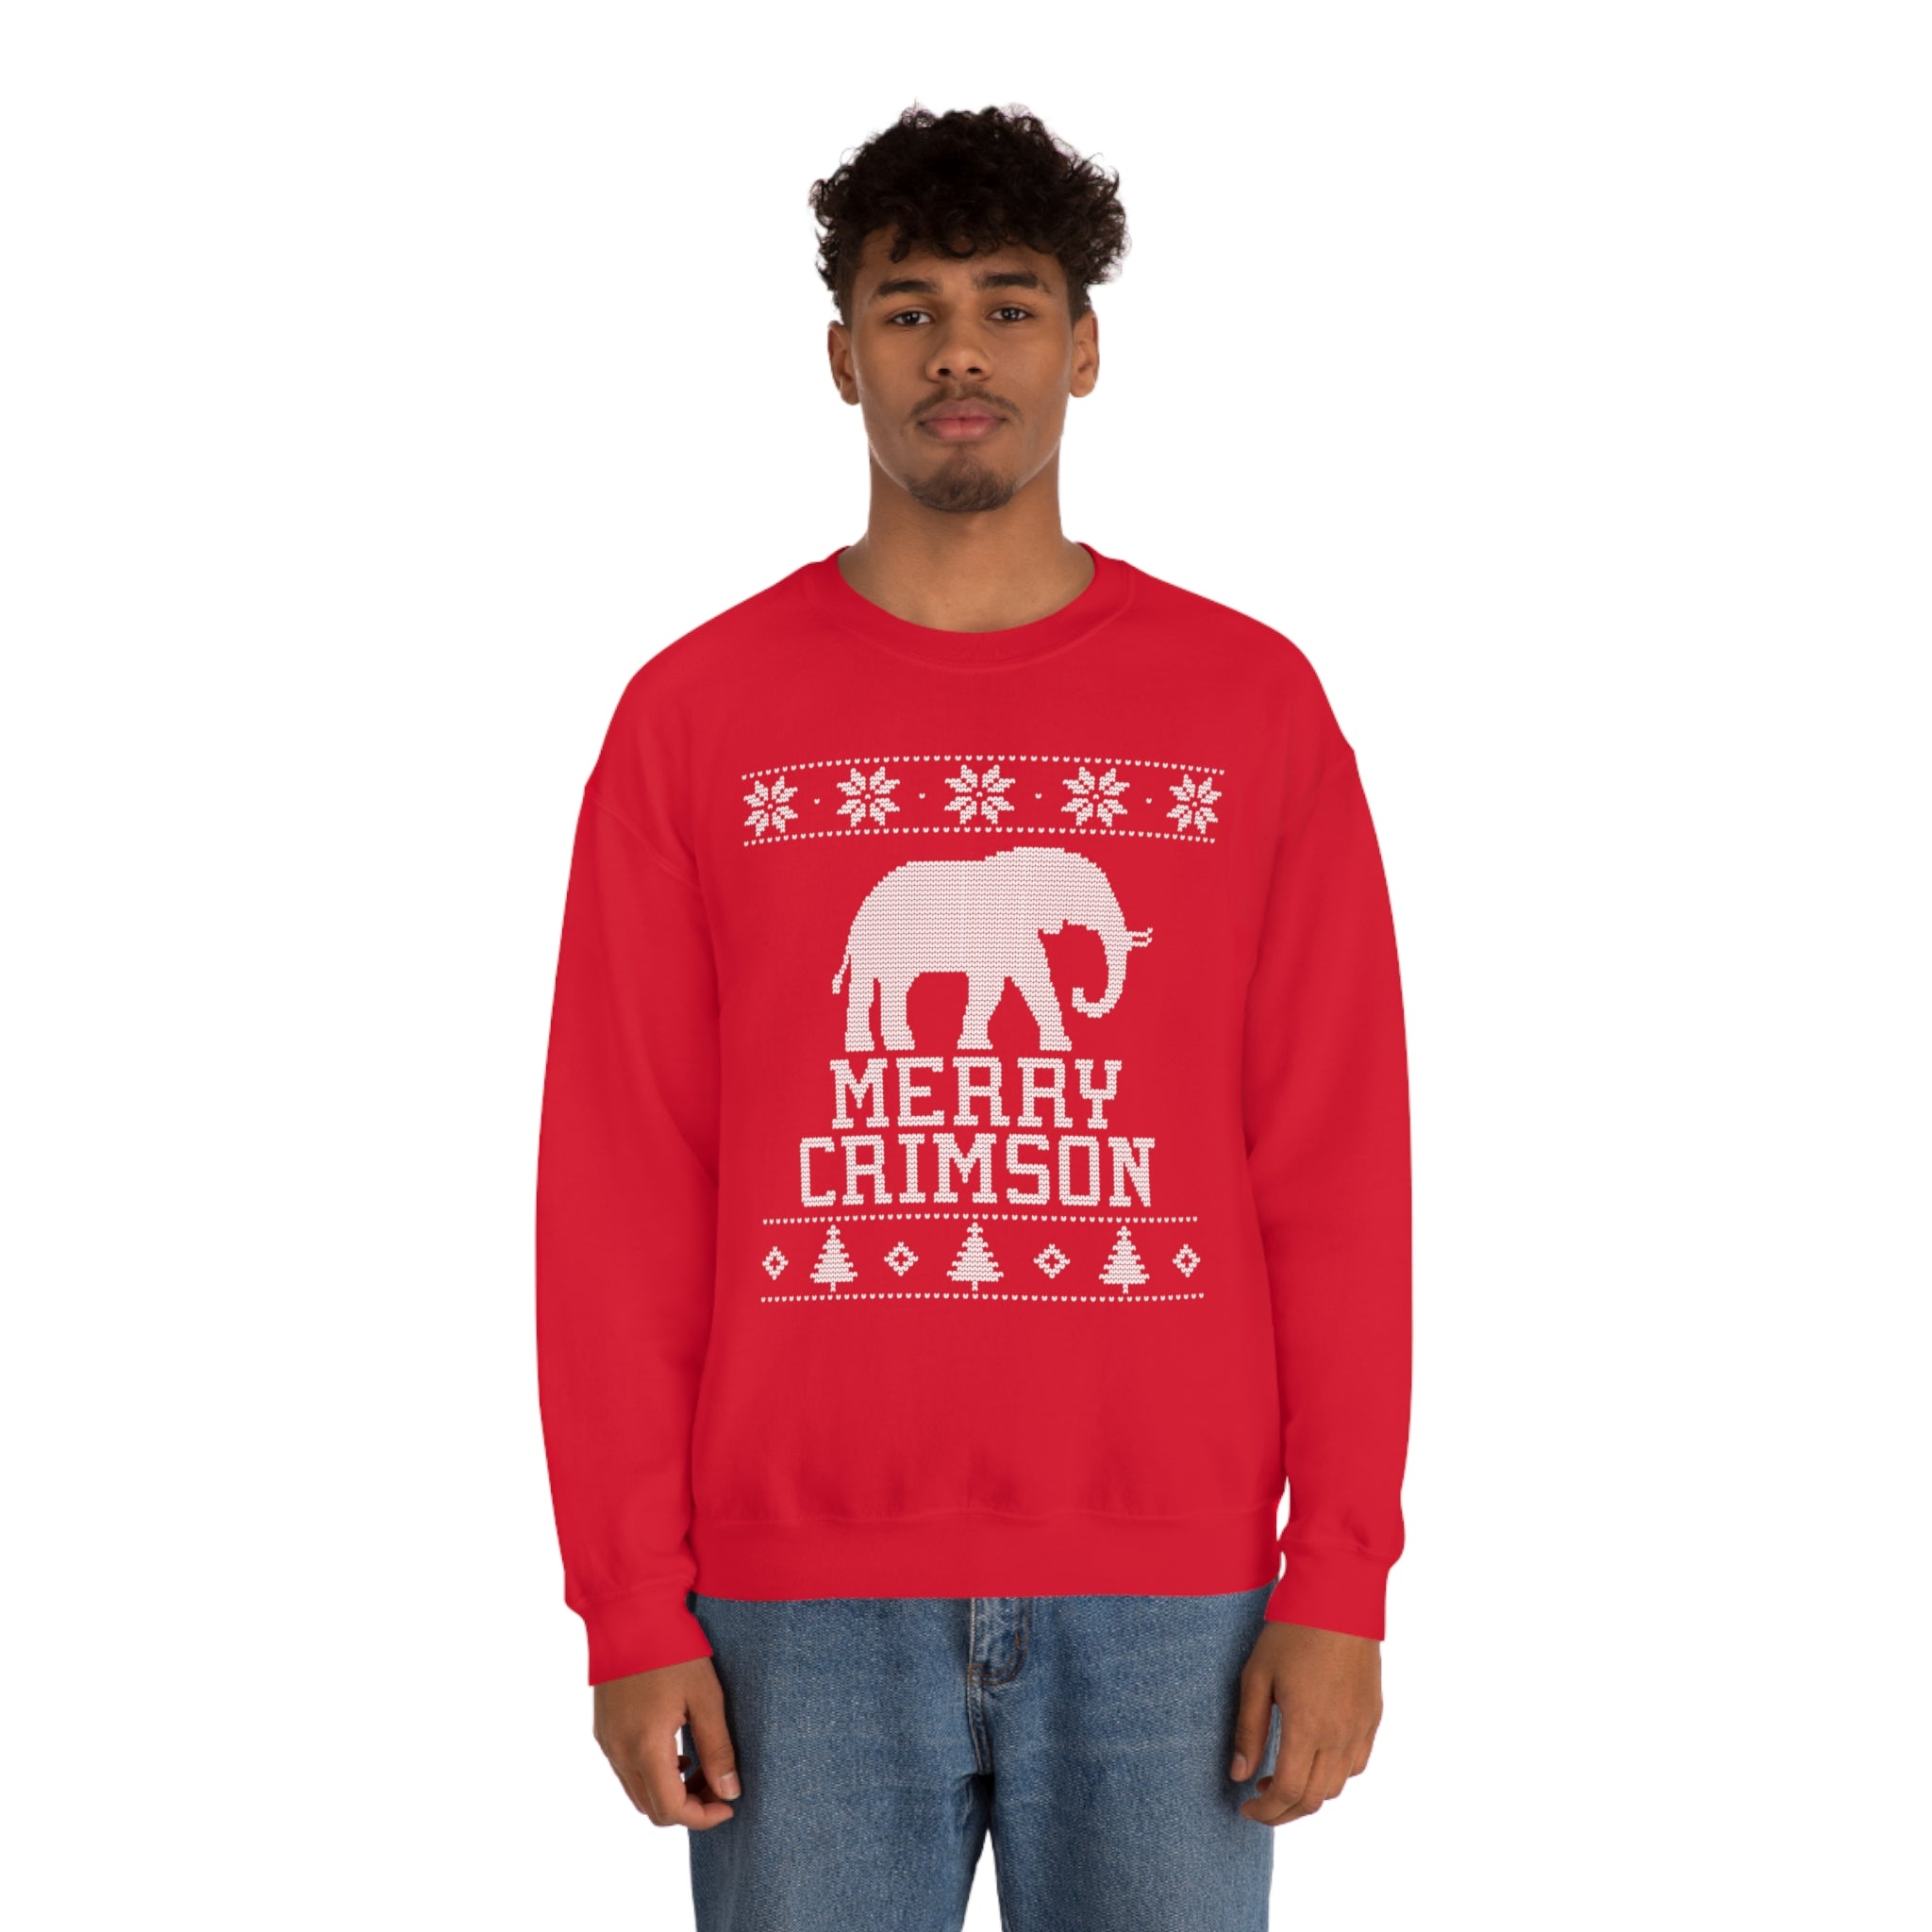 Merry Crimson Sweatshirt